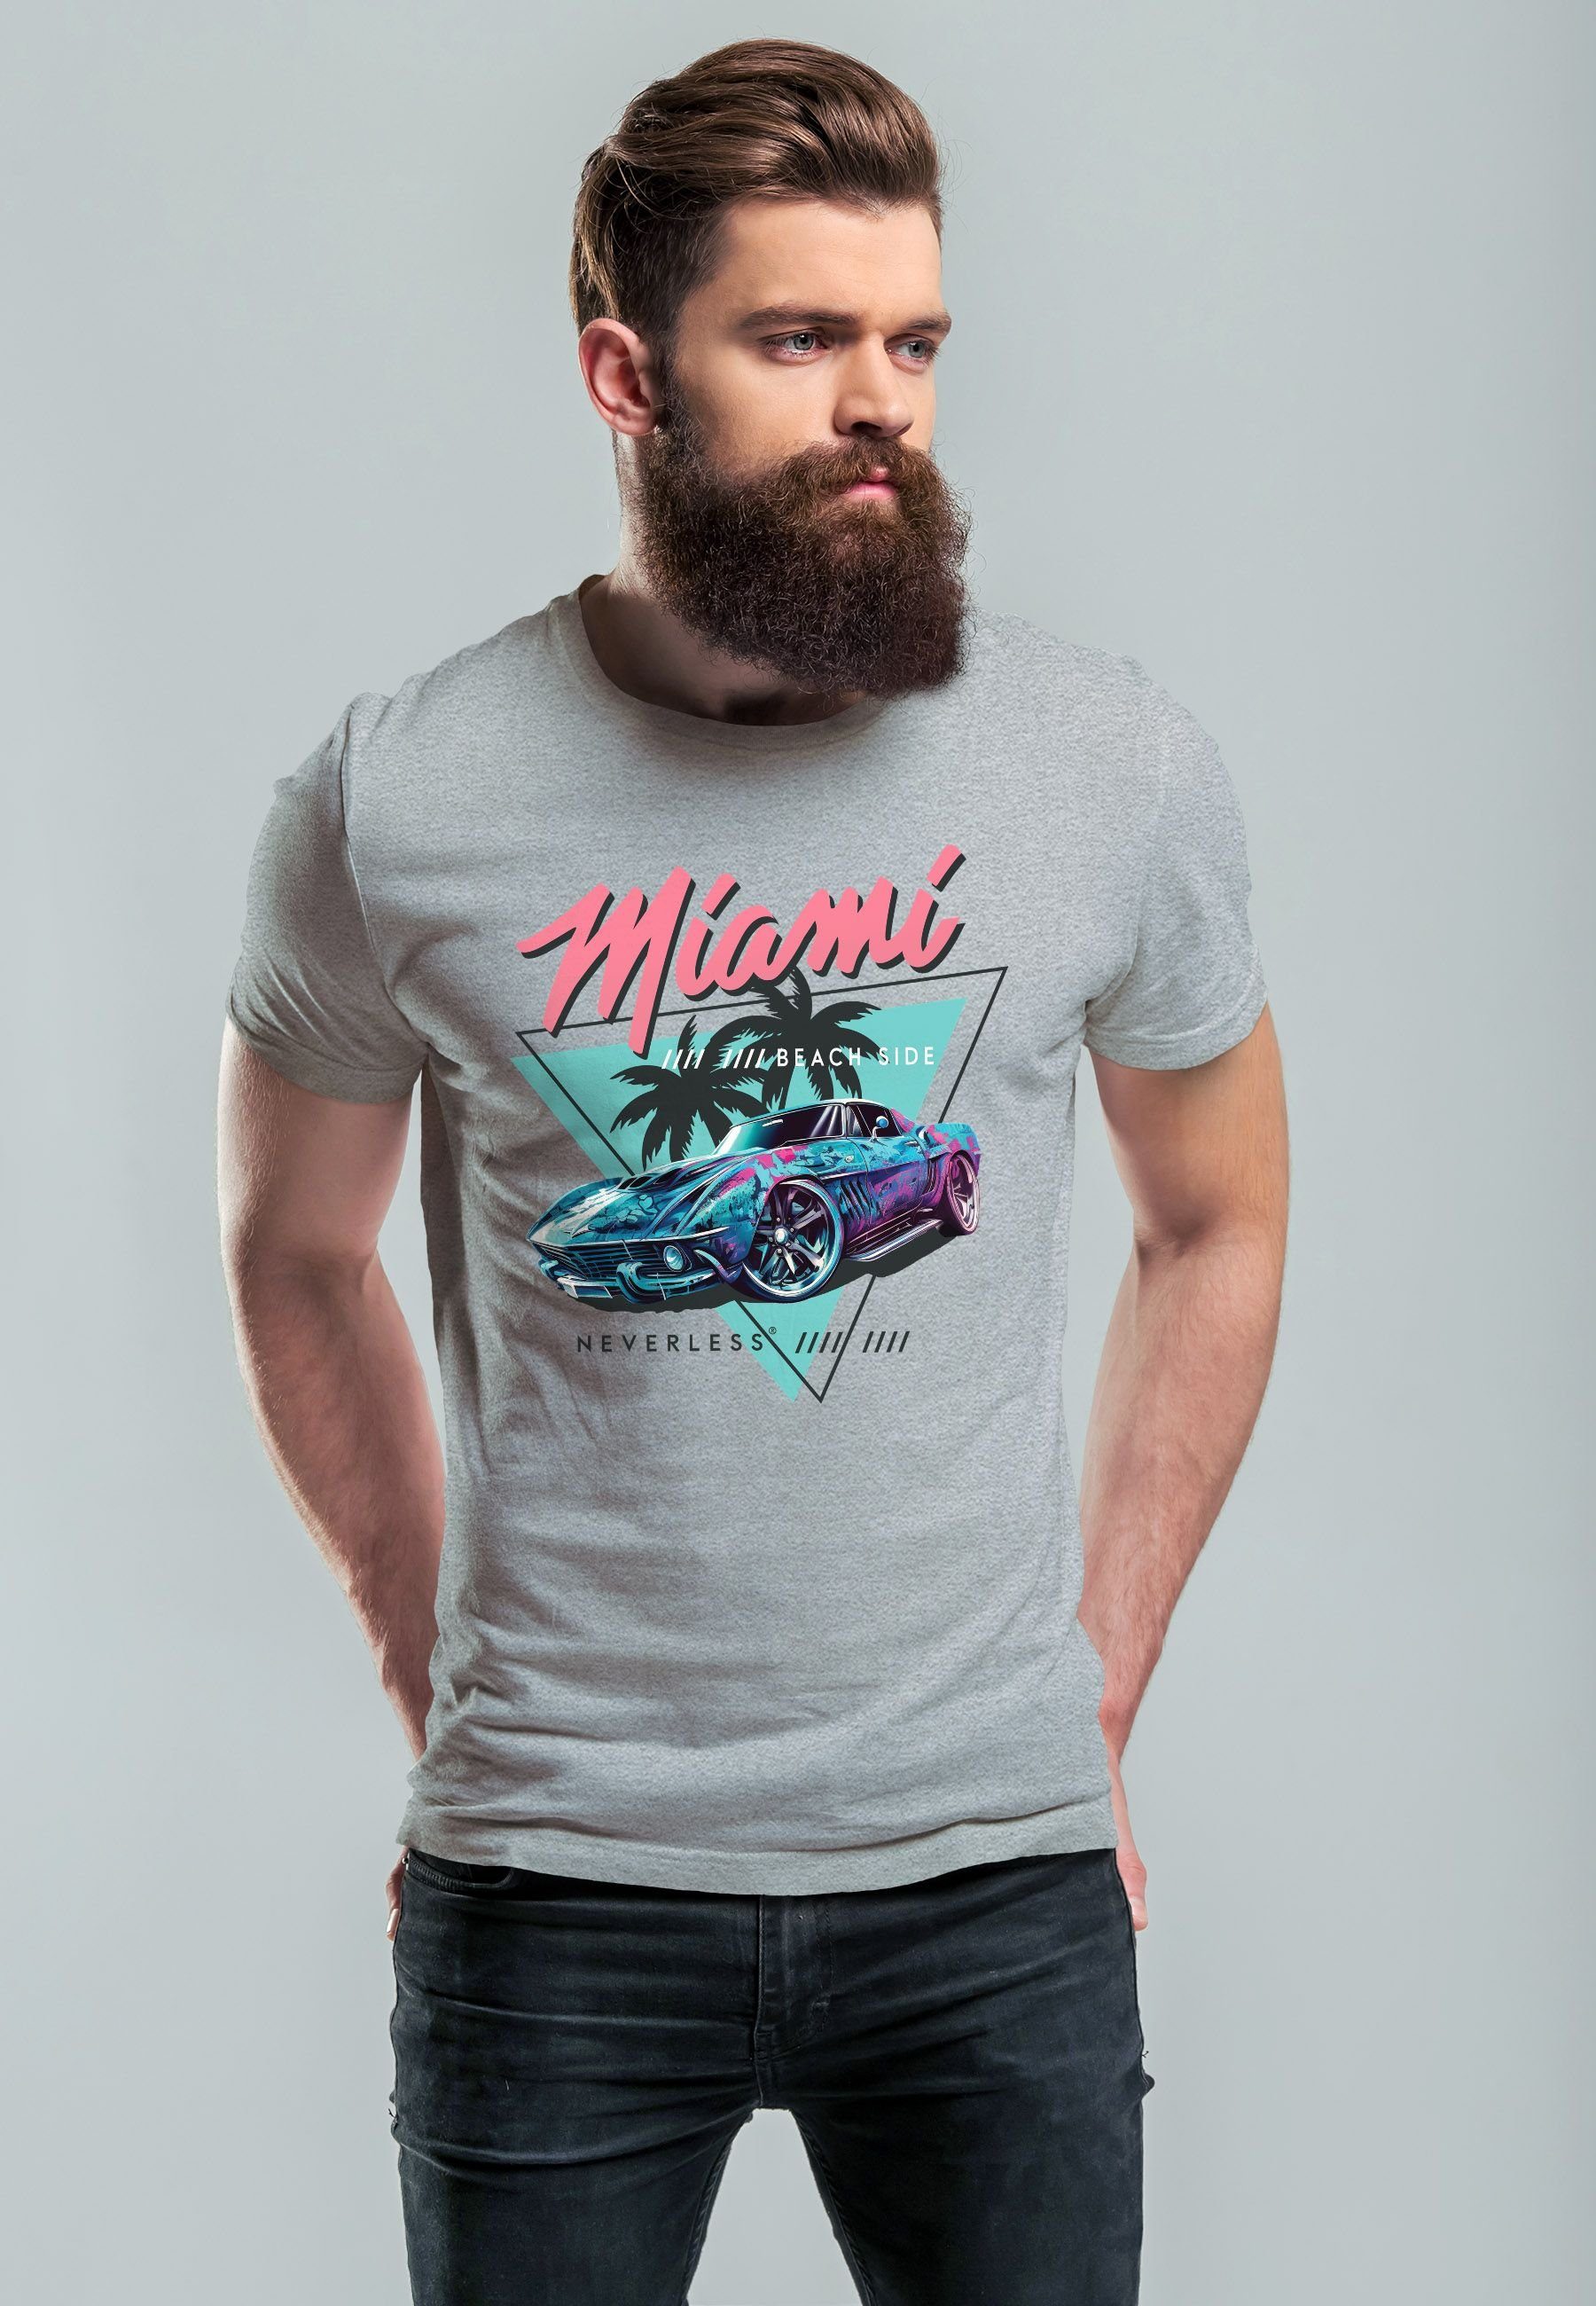 grau Bedruckt Neverless Print Miami Motiv Print-Shirt T-Shirt Beach mit Automobil Retro USA Surfing Herren